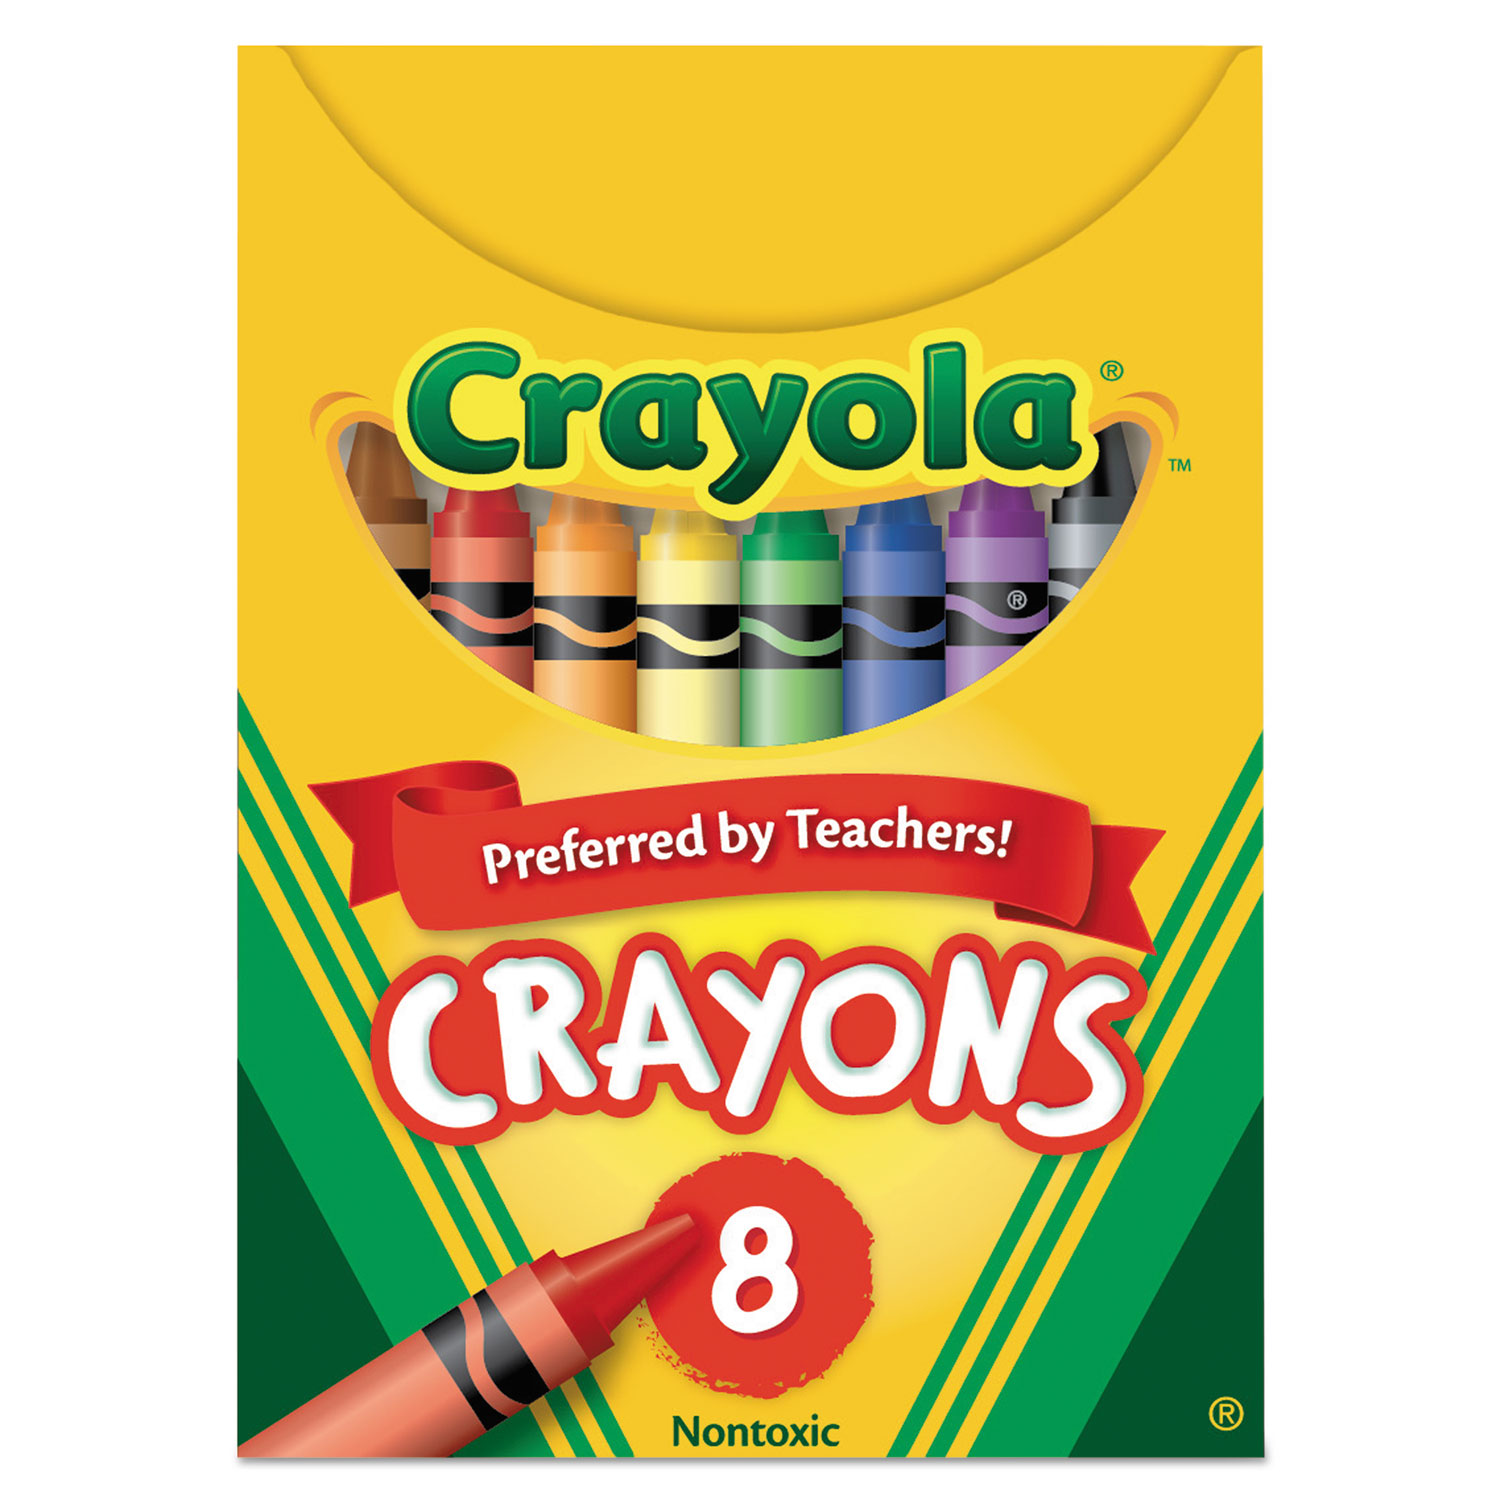 Classic Color Crayons, Tuck Box, 8 Colors